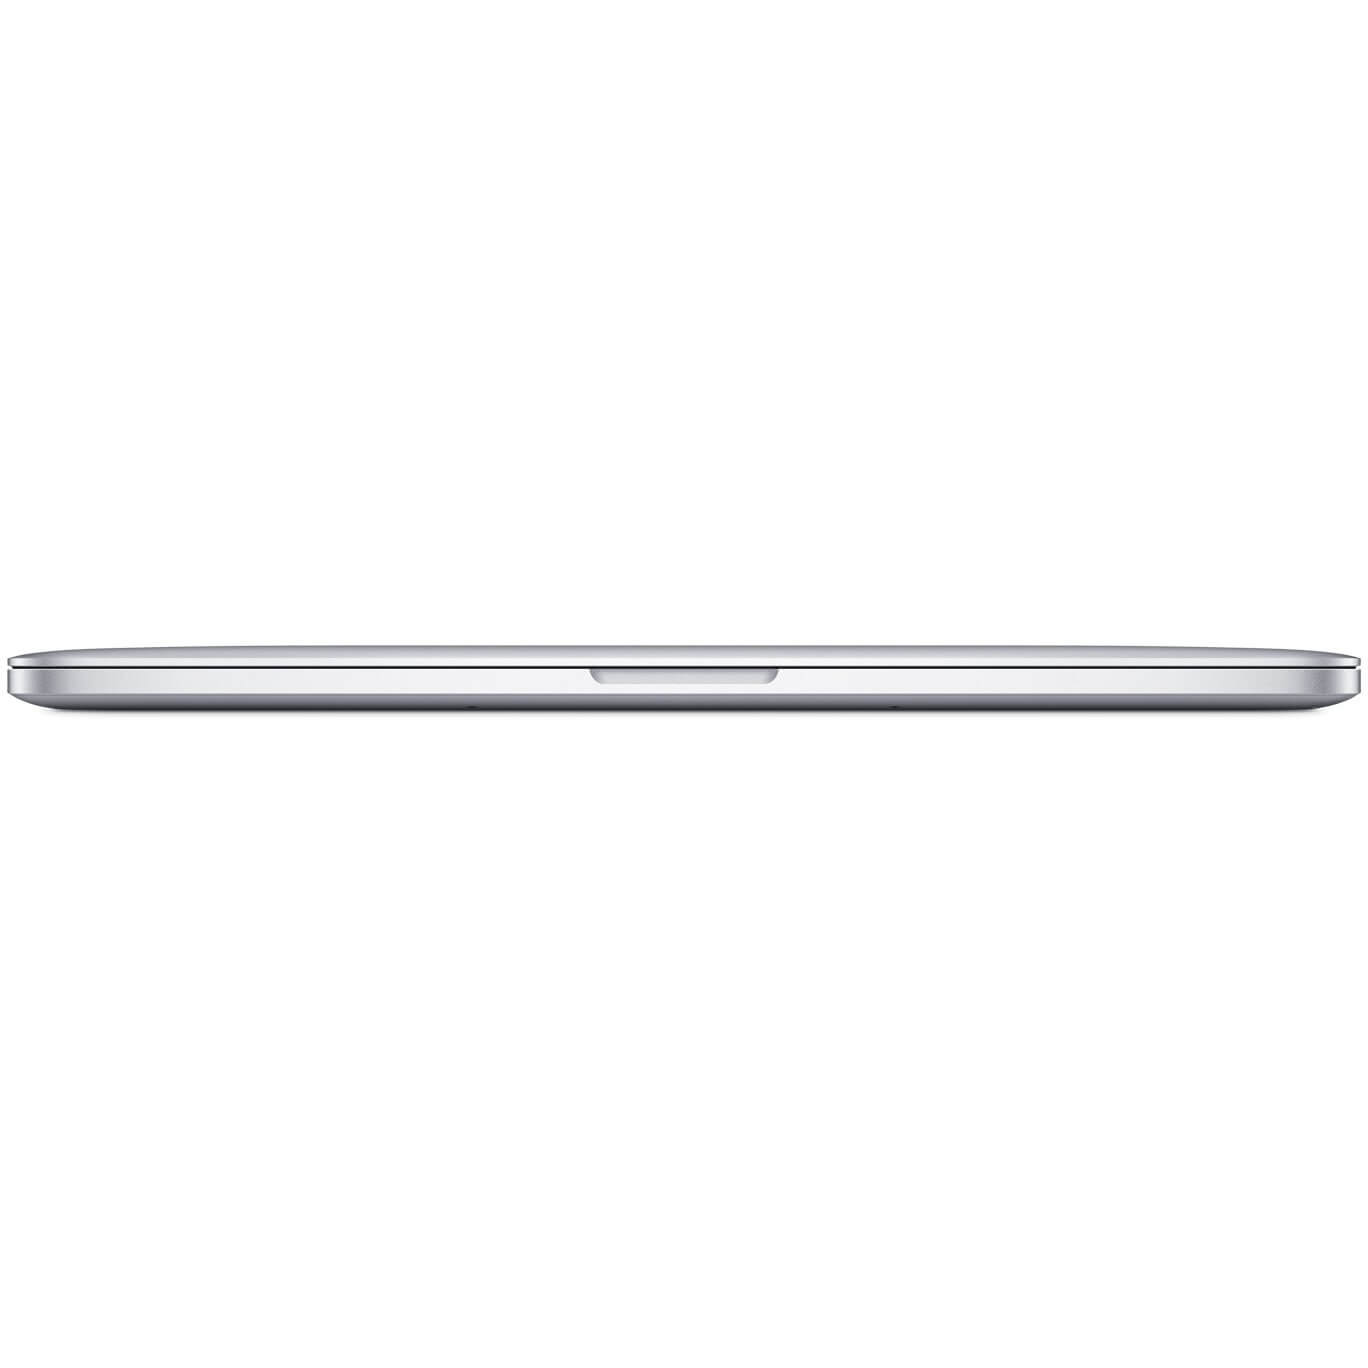  Apple MacBook Pro 15" with Retina display 2014 (FGXC2) CPO